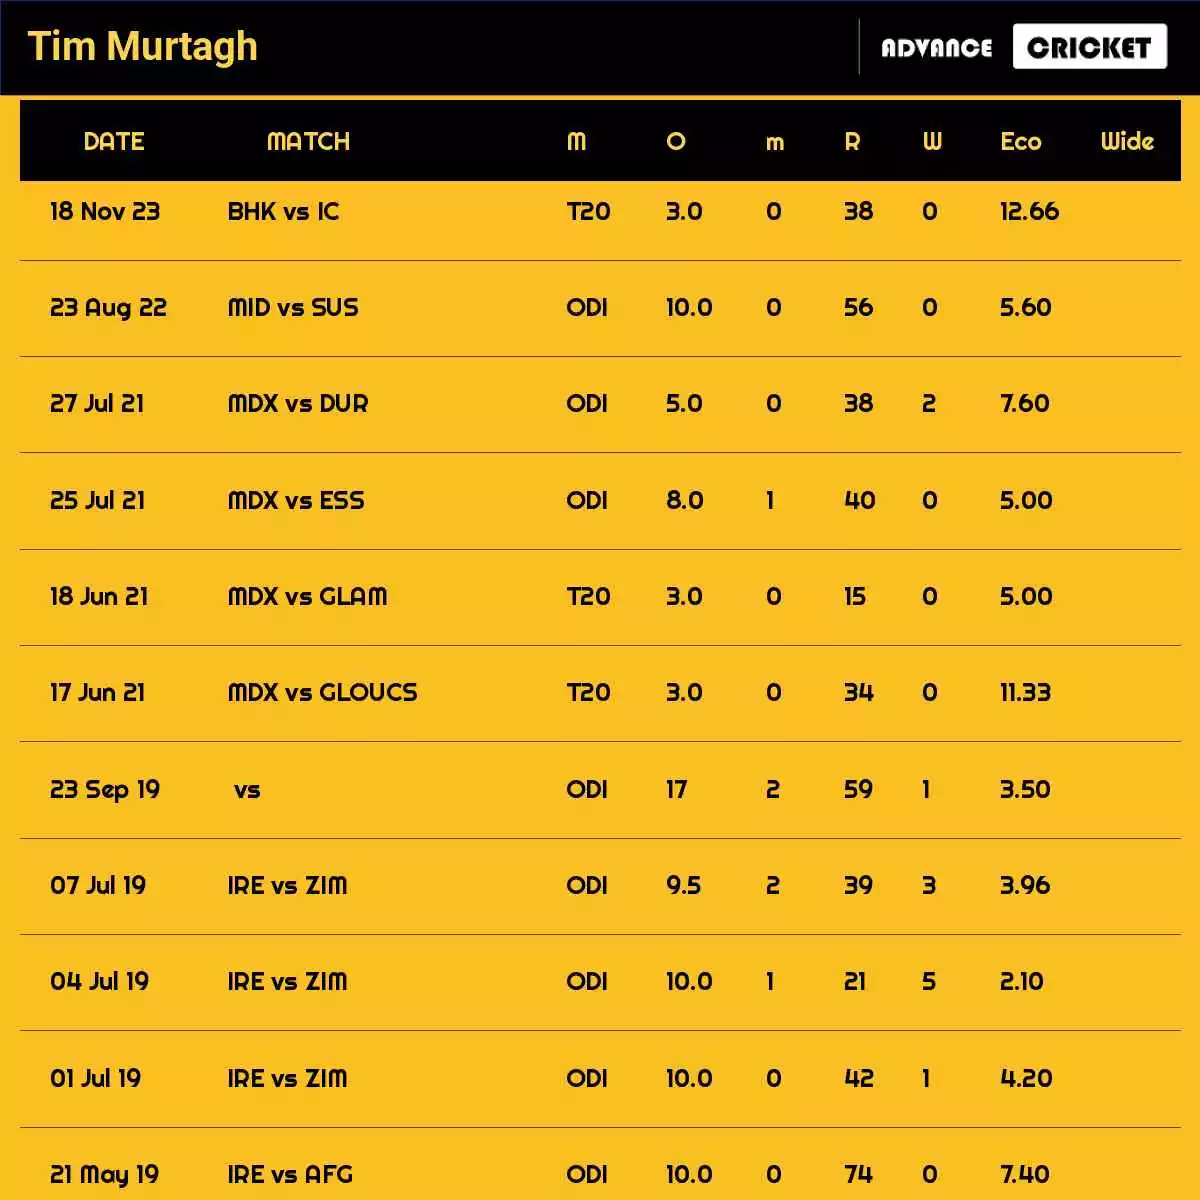 Tim Murtagh Recent Matches Details Date Wise